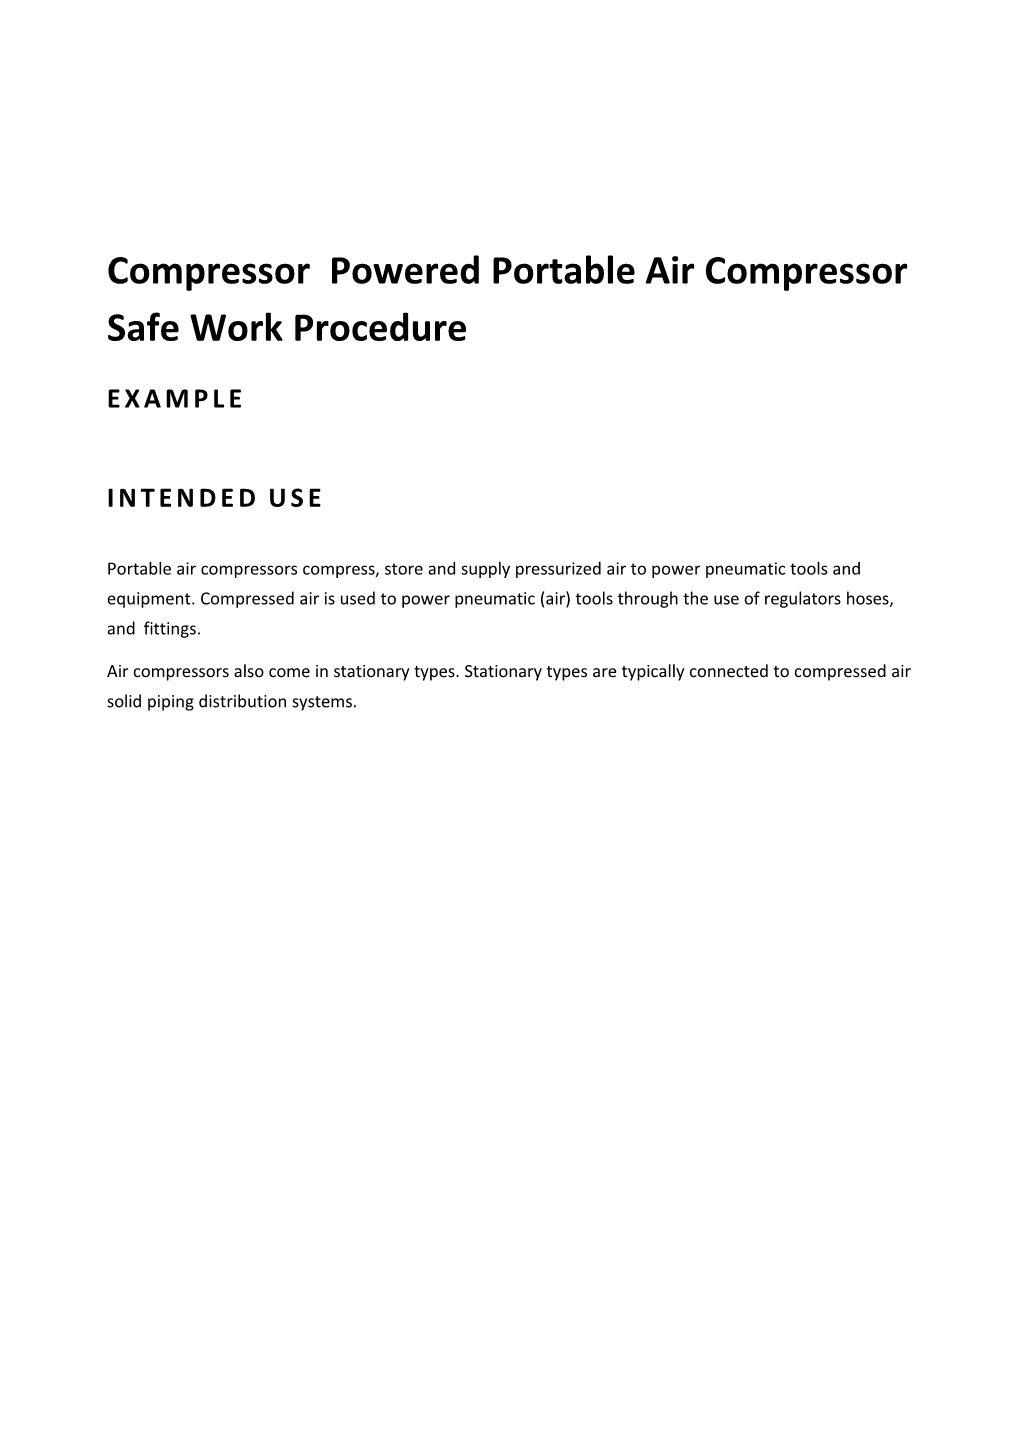 SWP-001 Compressor - Portable Air Compressor Safe Work Procedure